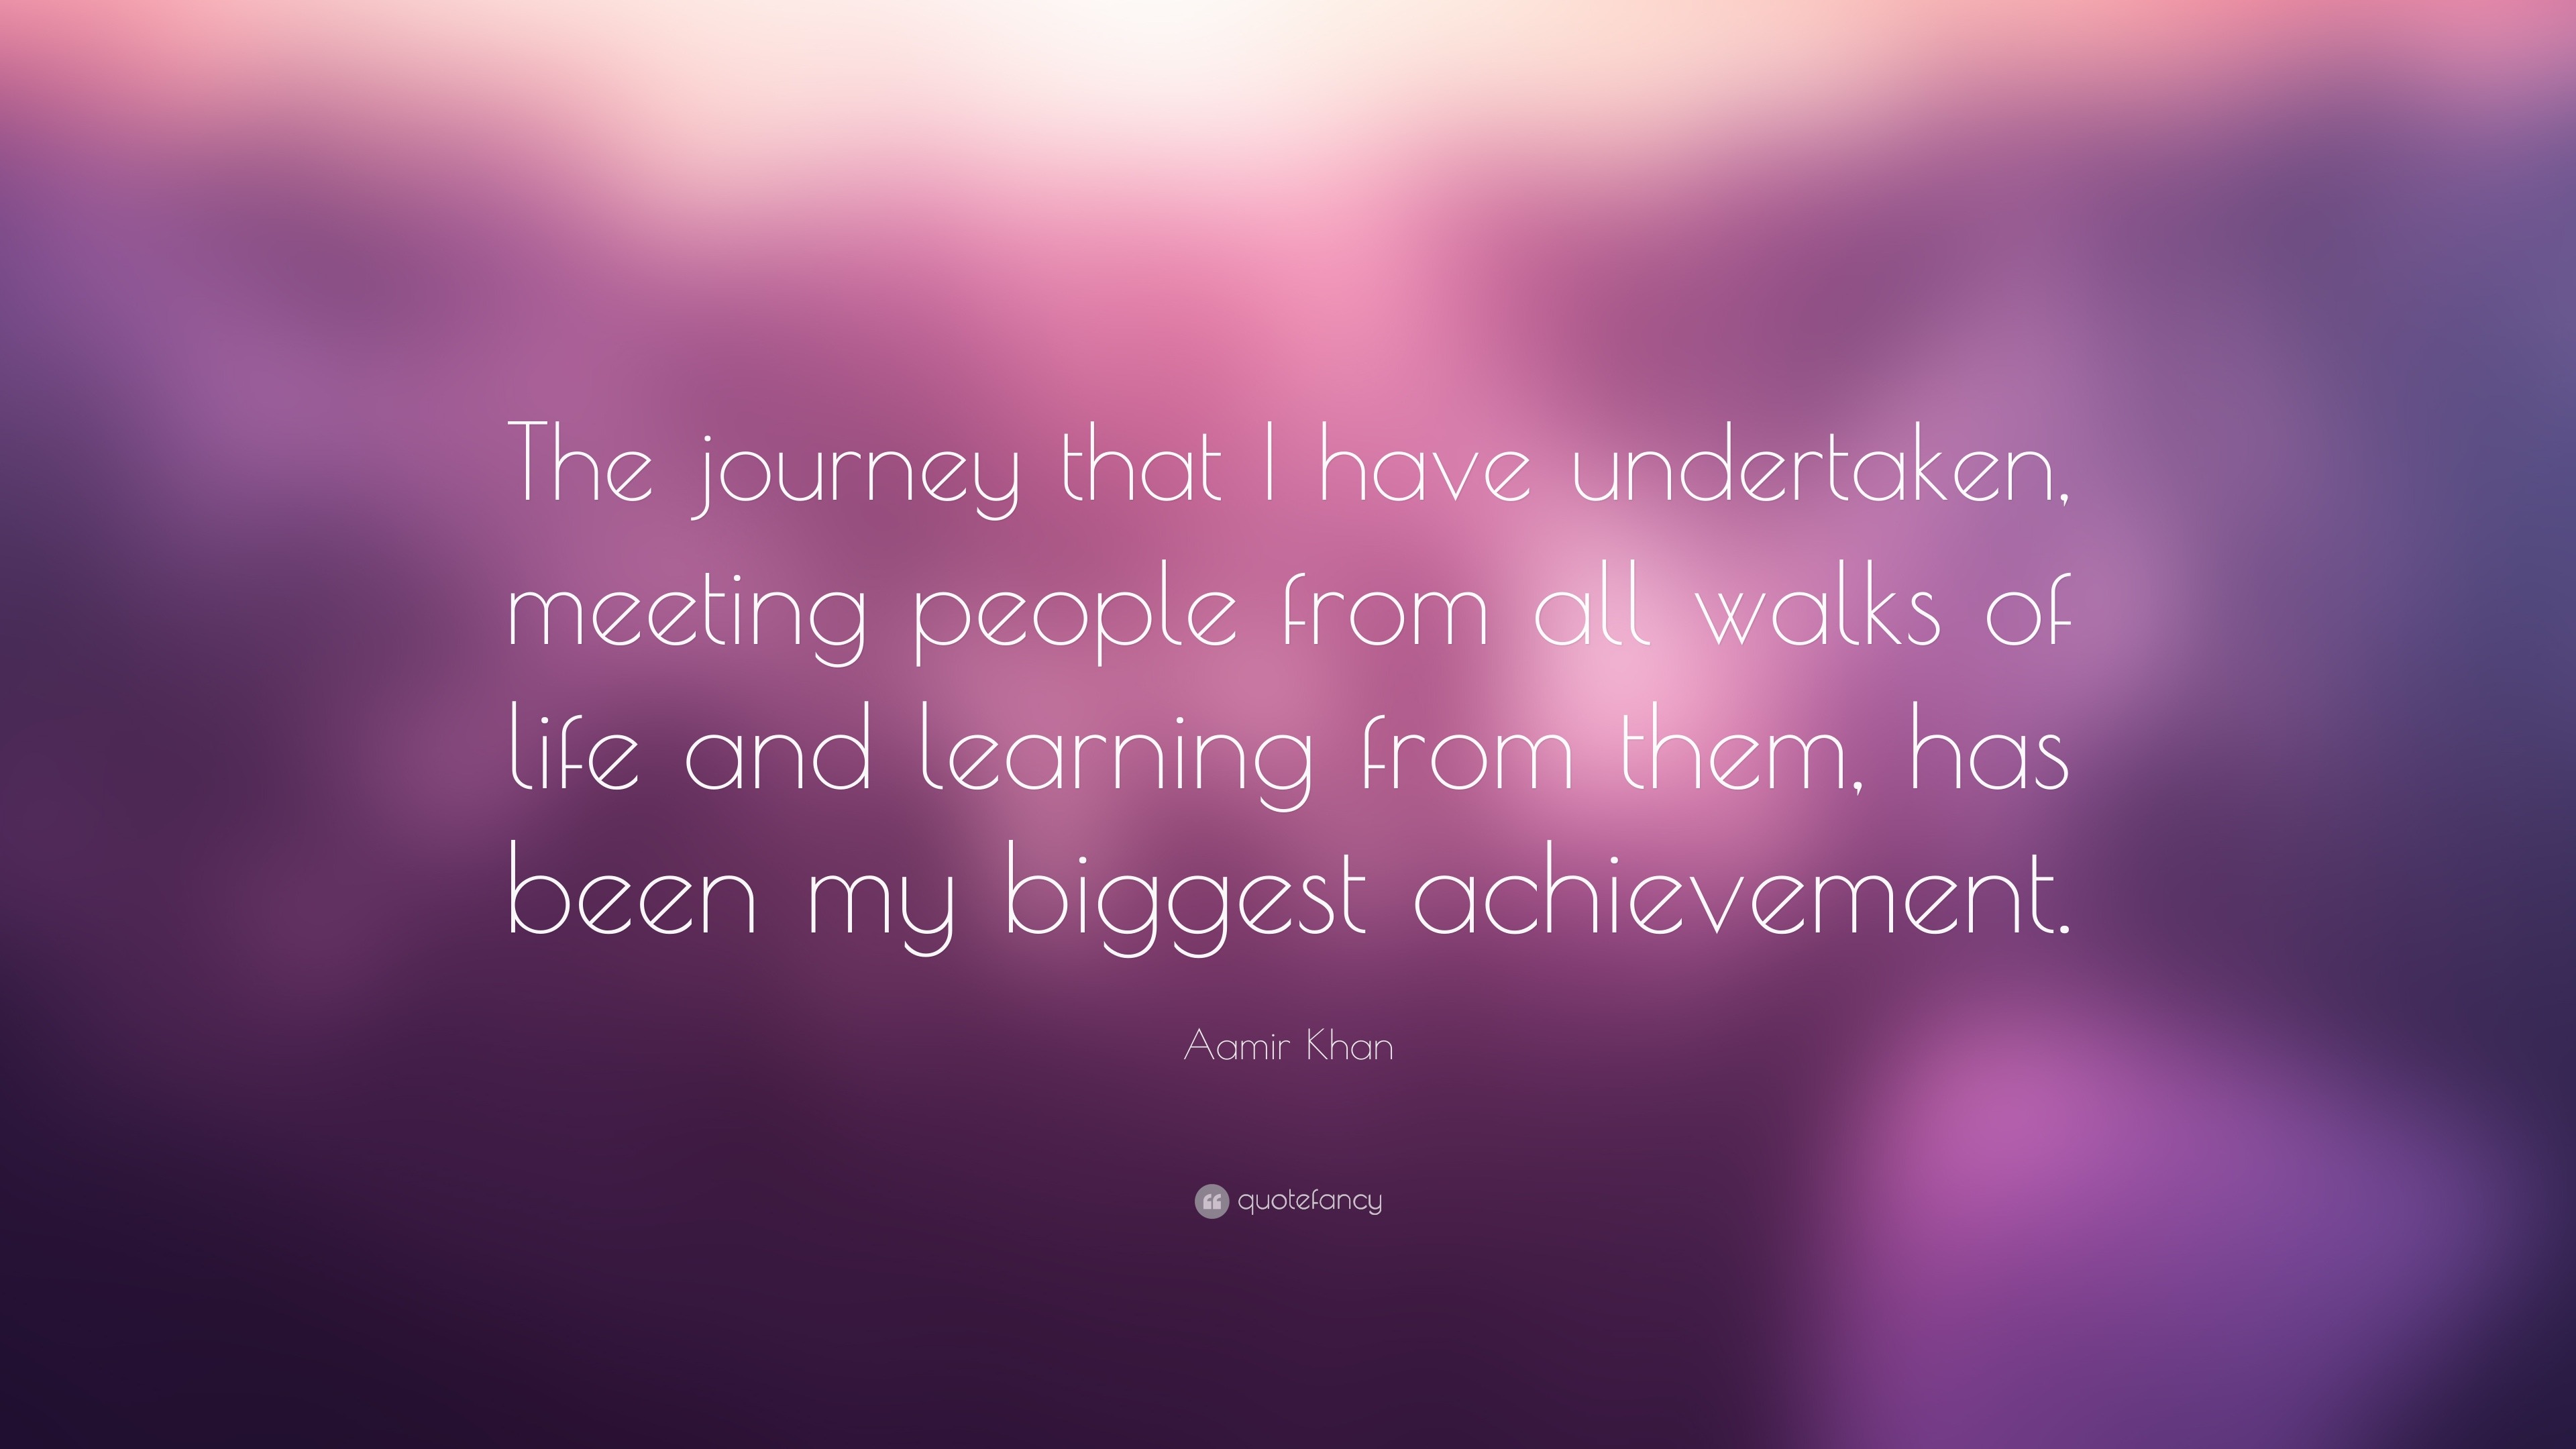 Aamir Khan Quote “The journey that I have undertaken, meeting people